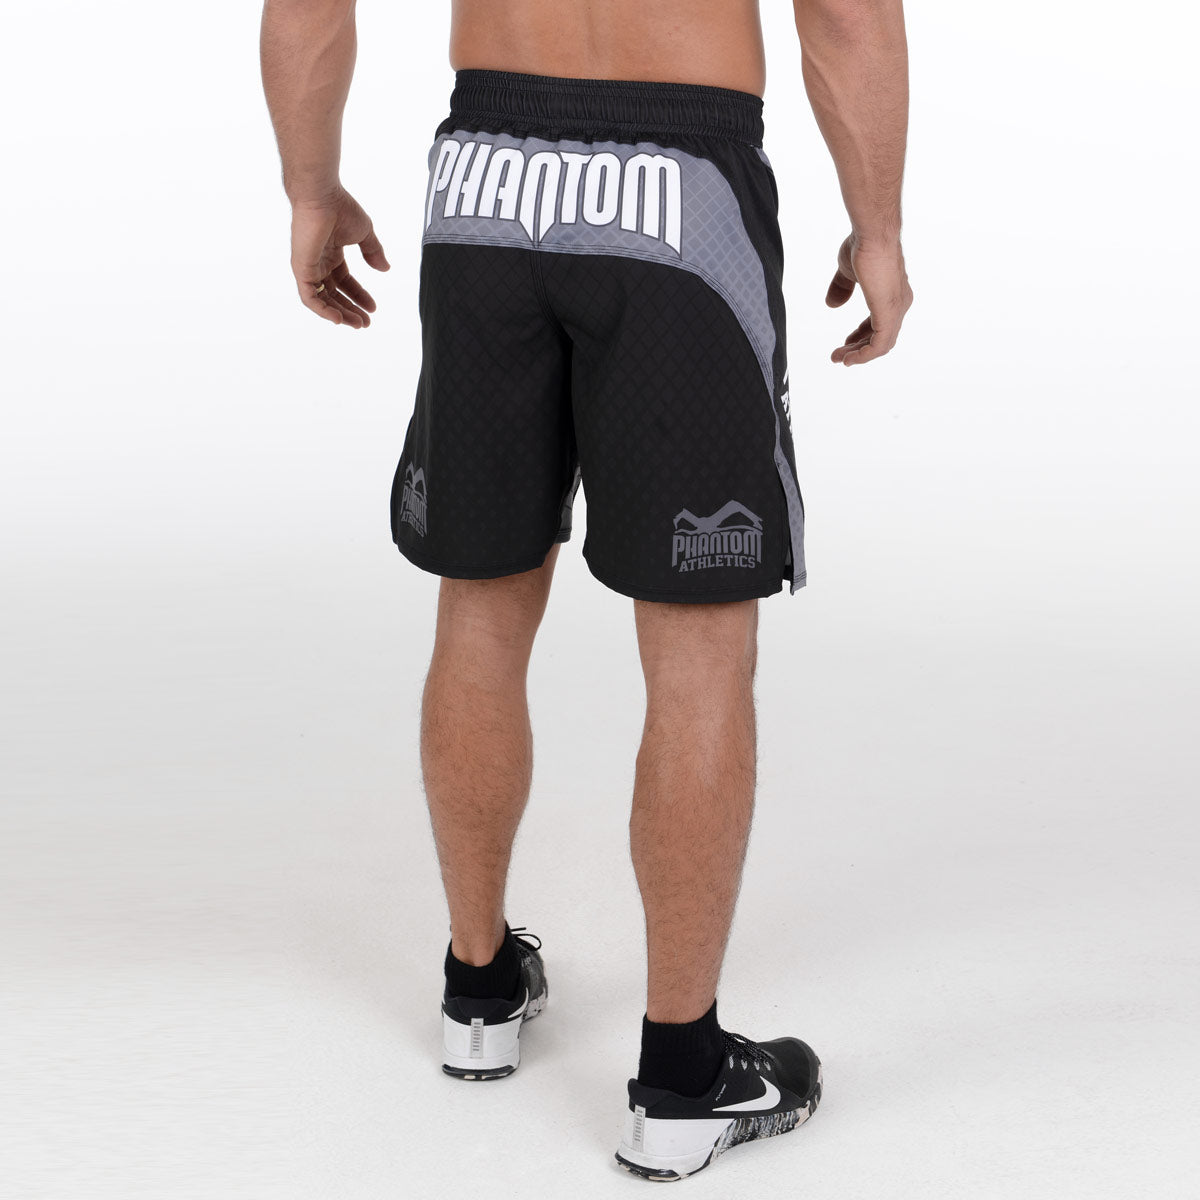 Phantom Athletics Fight Shorts STORM NITRO Black/Gray MMA Kickboxen Hose Herren 